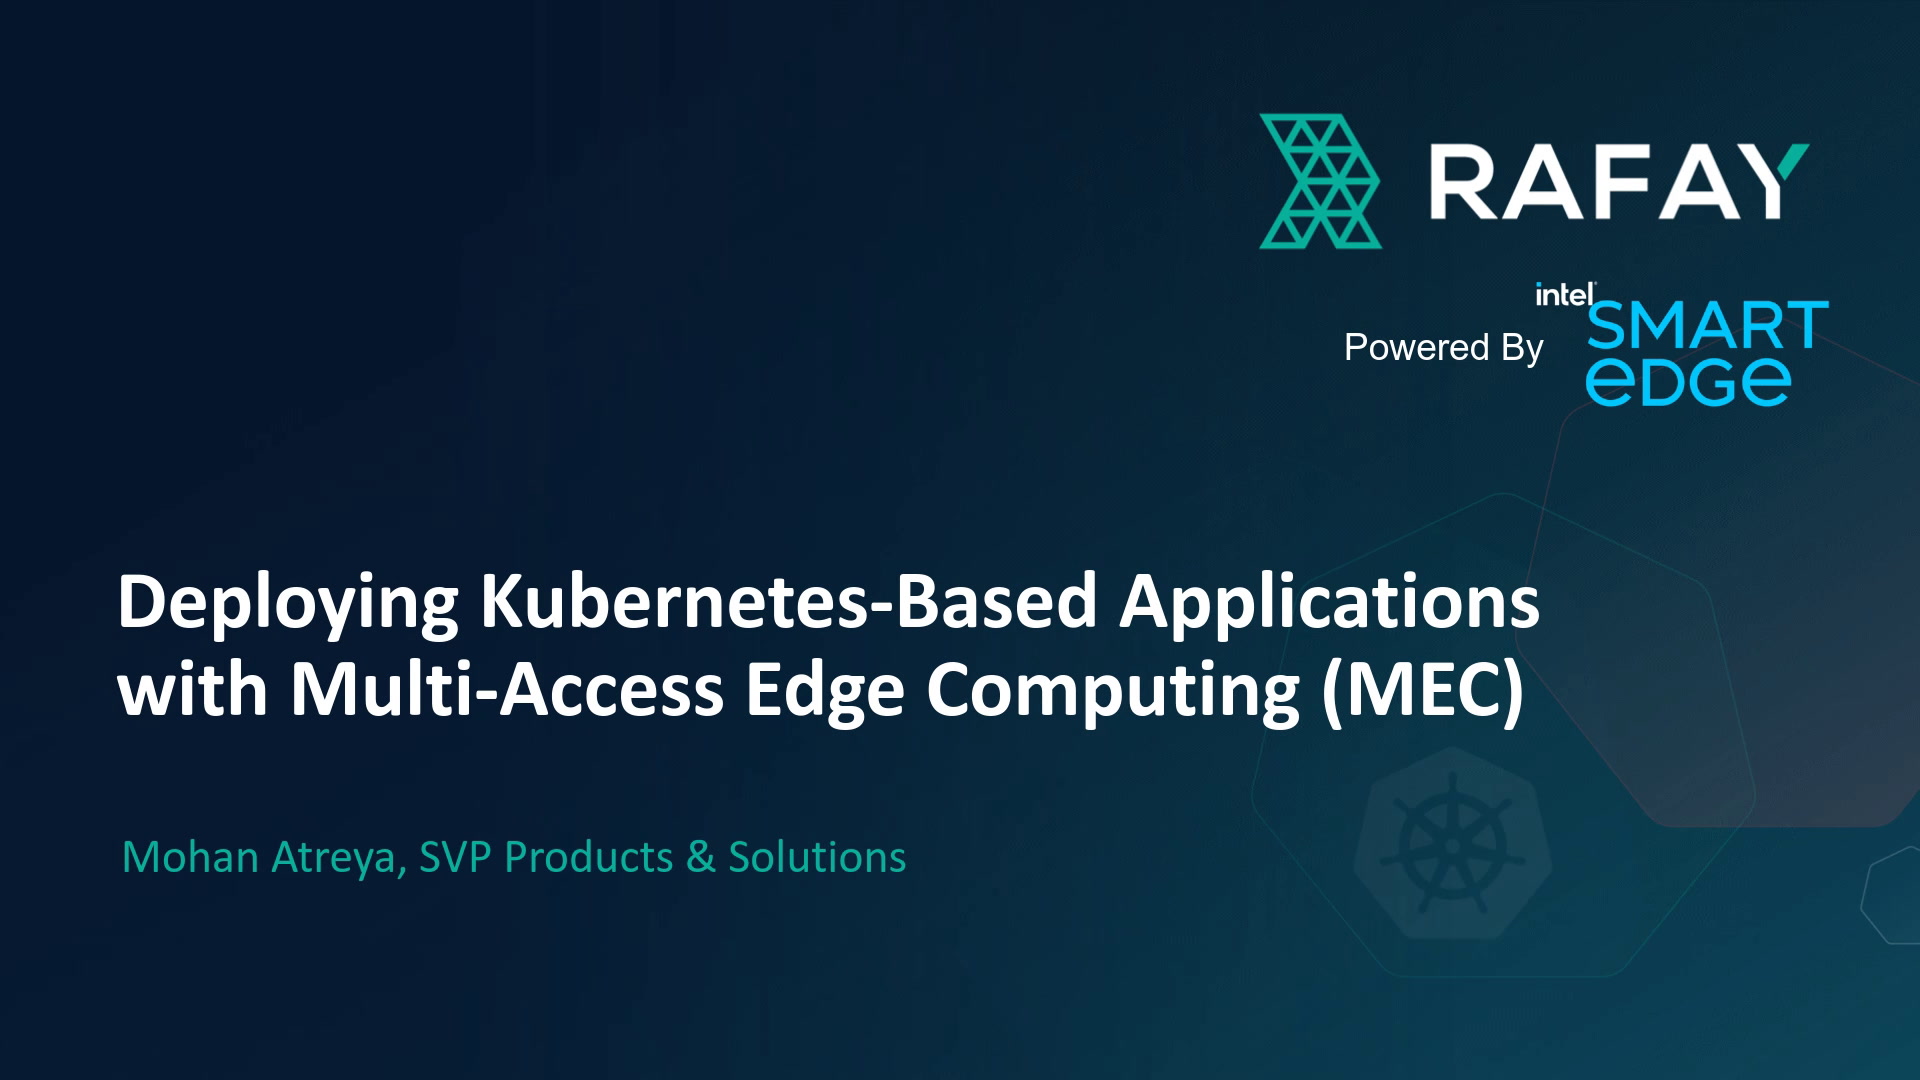 Deploying Kubernetes-Based Applications with Multi-Access Edge Computing (MEC)